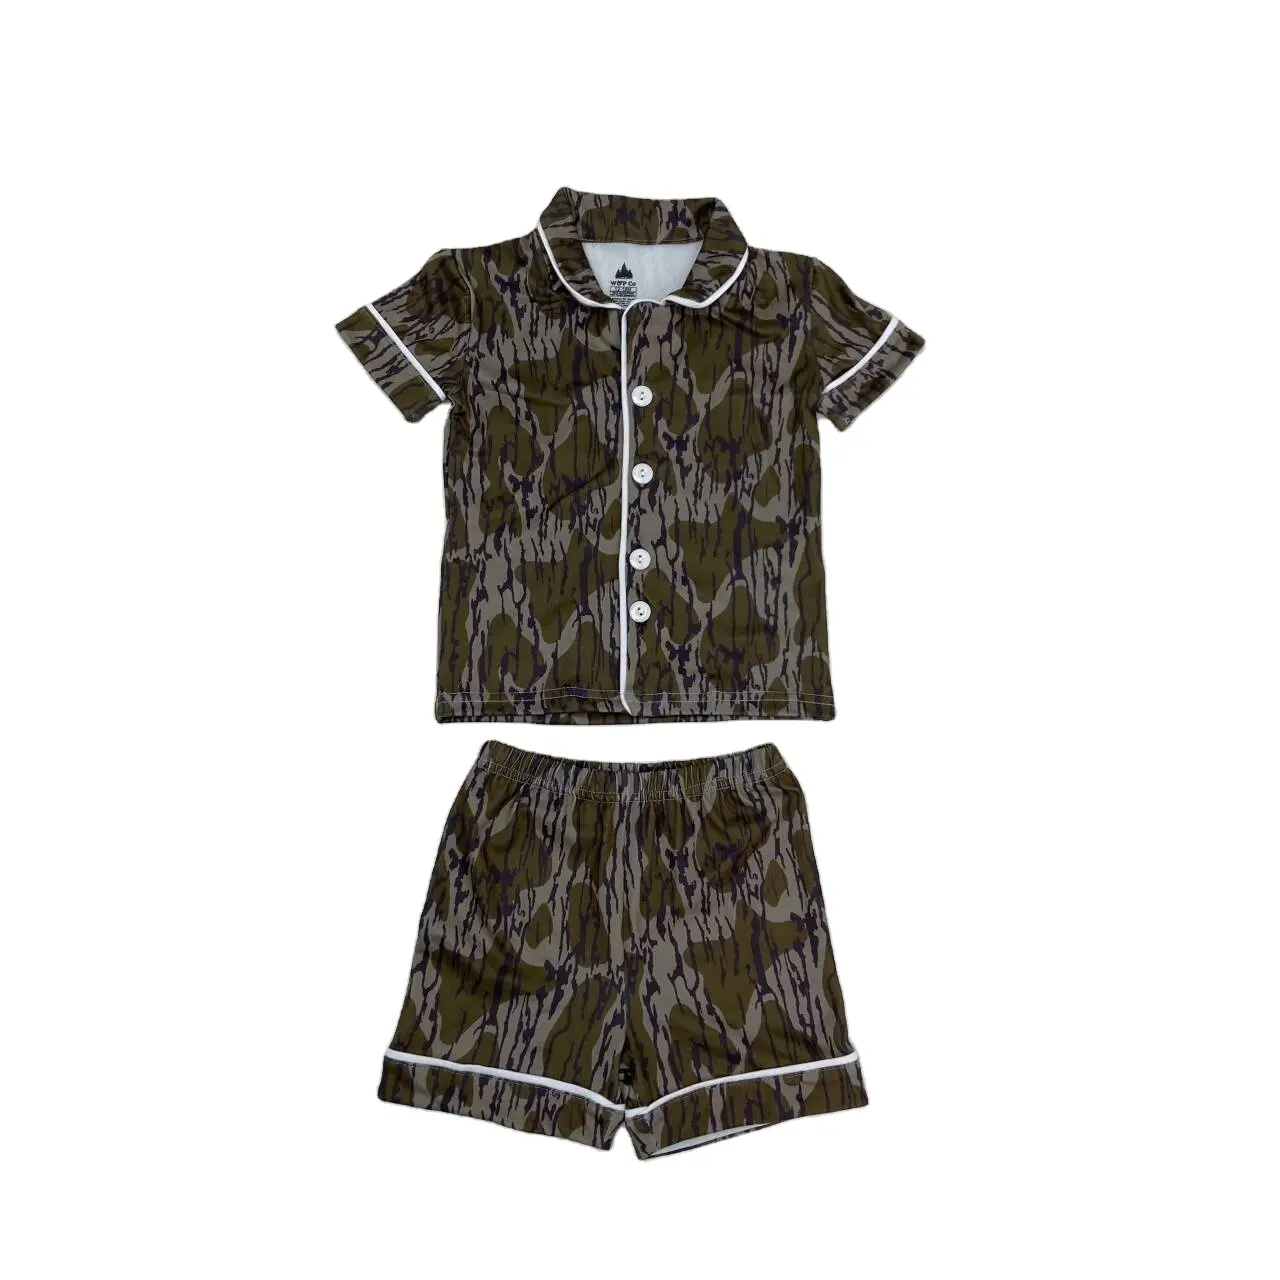 Newborn Baby Toddler Kids Pajamas Sets Summer Short Button Down T-shirt Boys Sleepwear 2 Pieces boutique Clothing